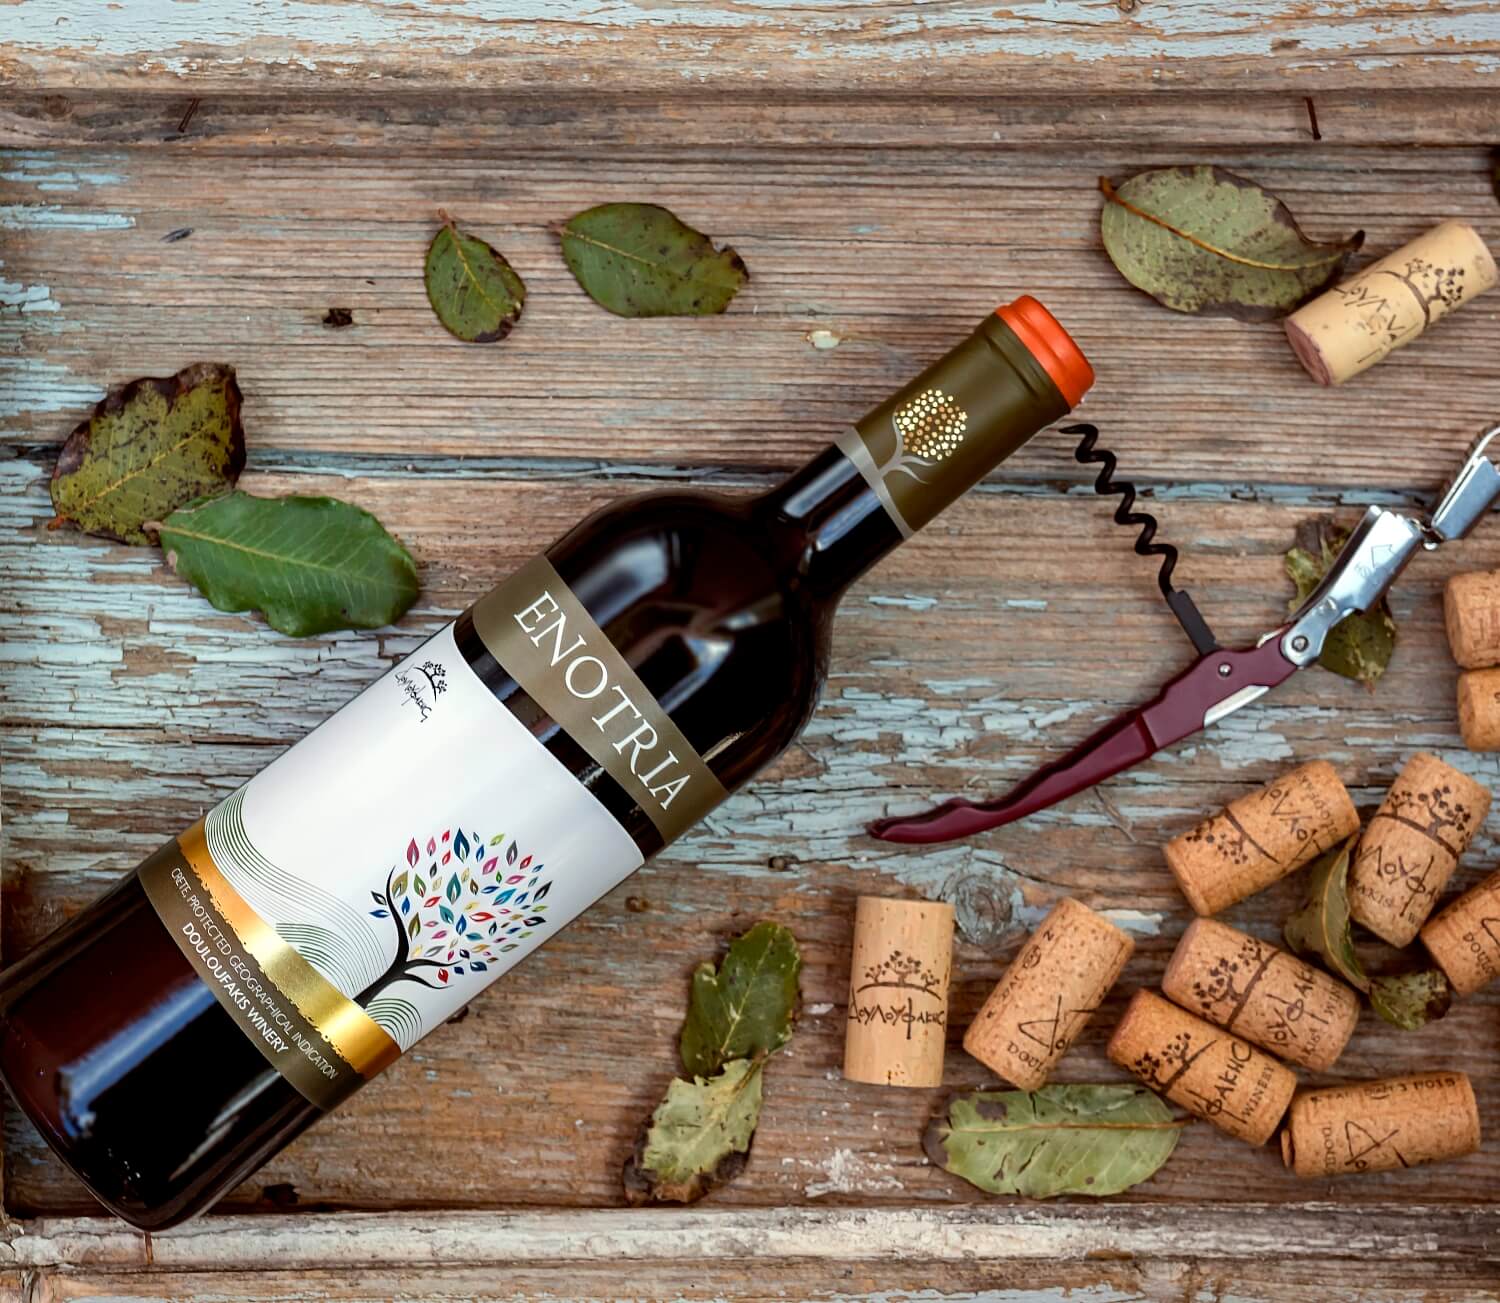 Douloufakis Syrah Kotsifali Liatiko grape wine